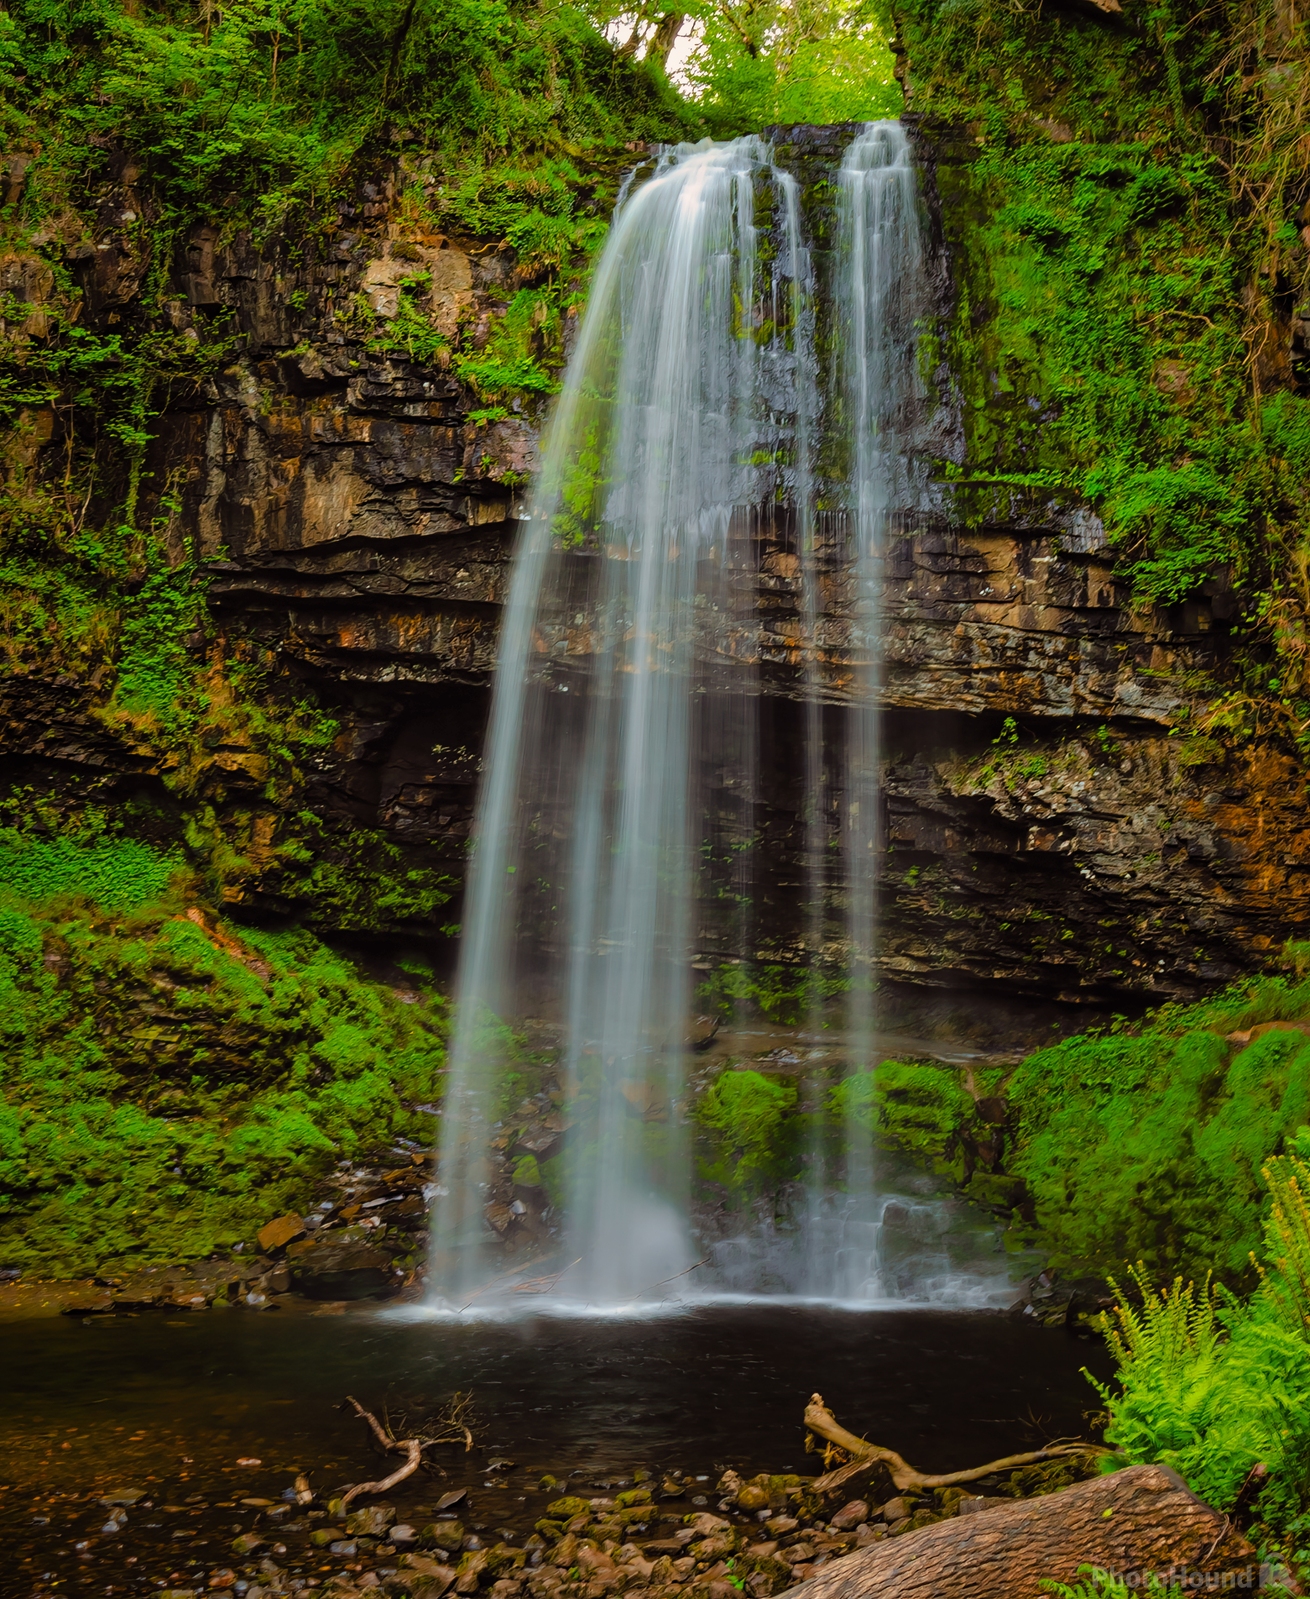 Image of Henrhyd Falls by John Crowland